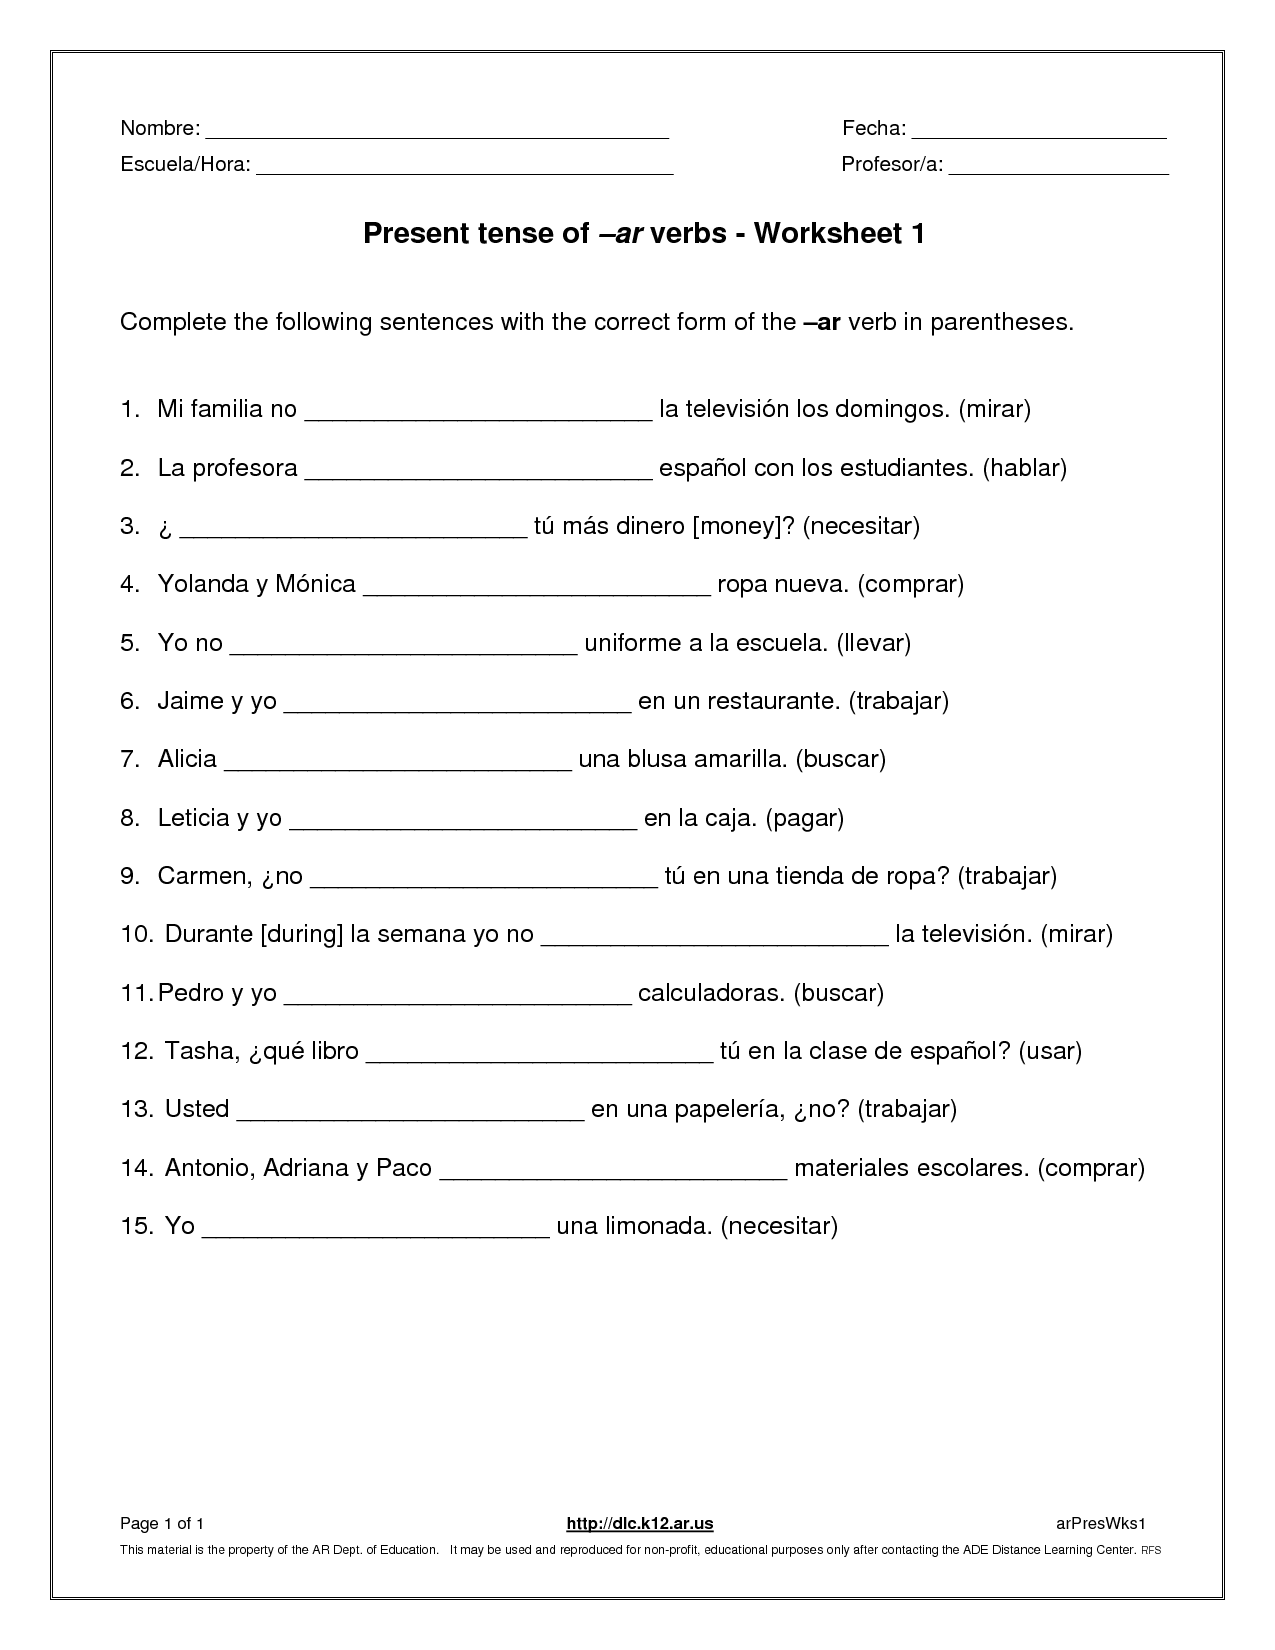 french-er-verbs-worksheets-present-tense-verb-worksheets-verb-worksheets